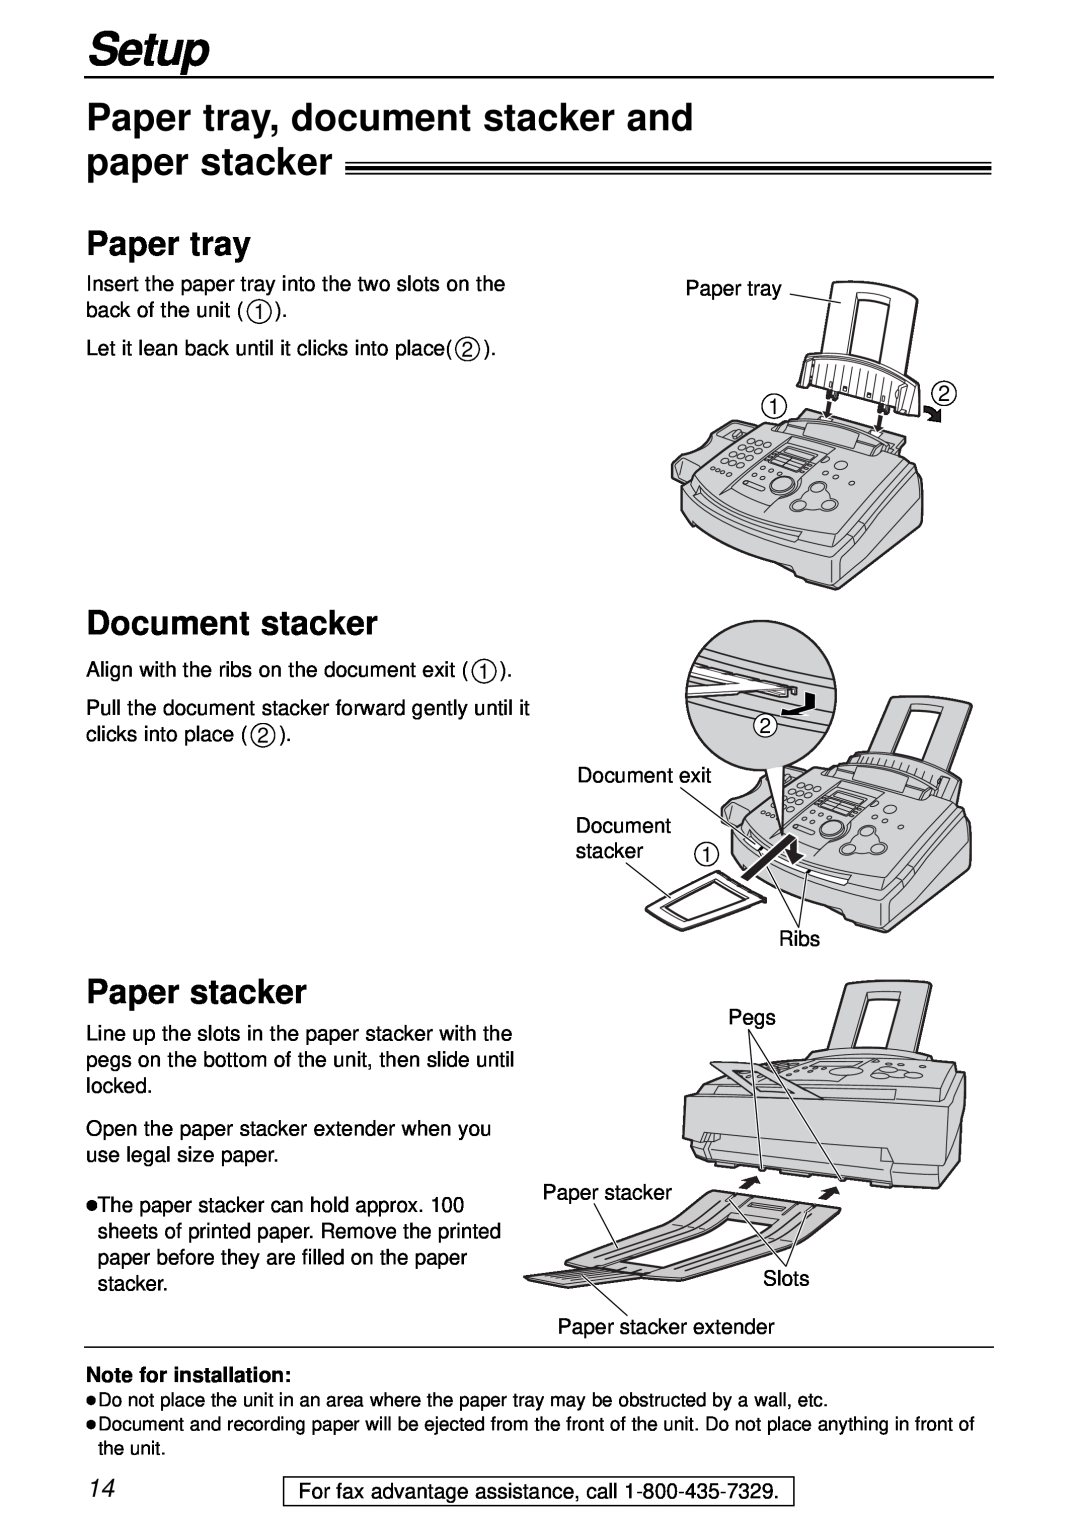 Panasonic KX-FL501 manual Paper tray, document stacker and paper stacker, Document stacker, Paper stacker, Setup 